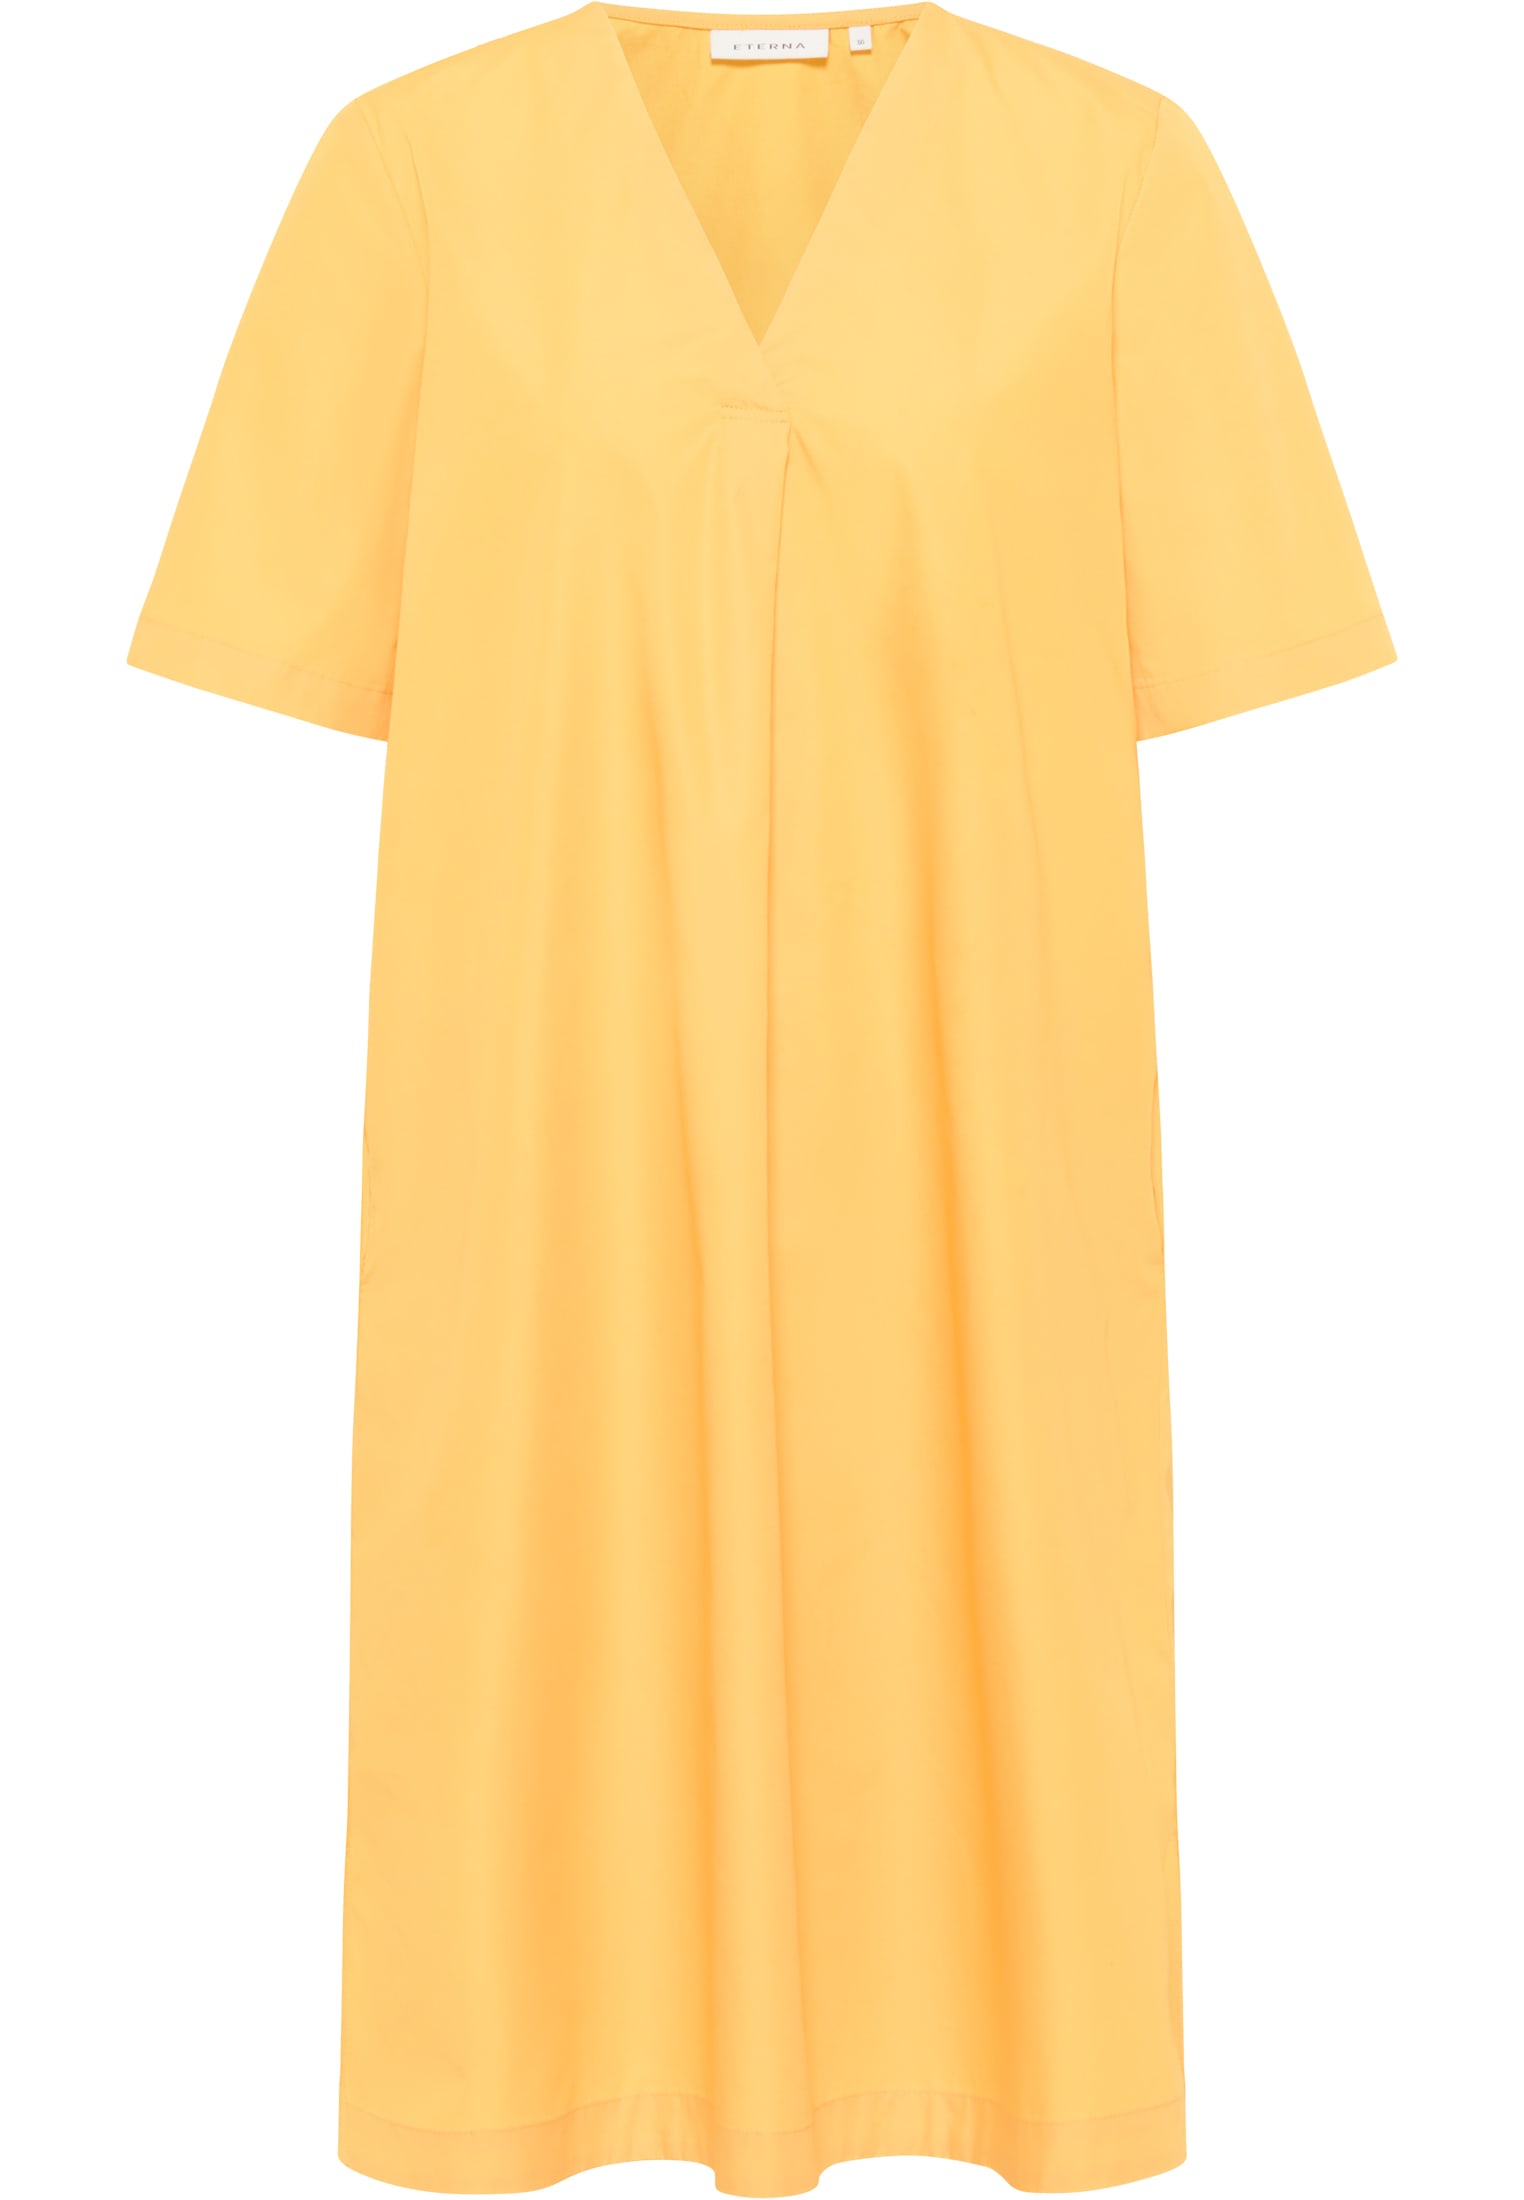 Shirt dress in | 42 plain short sleeve mandarin | 2DR00211-08-21-42-1/2 | | mandarin